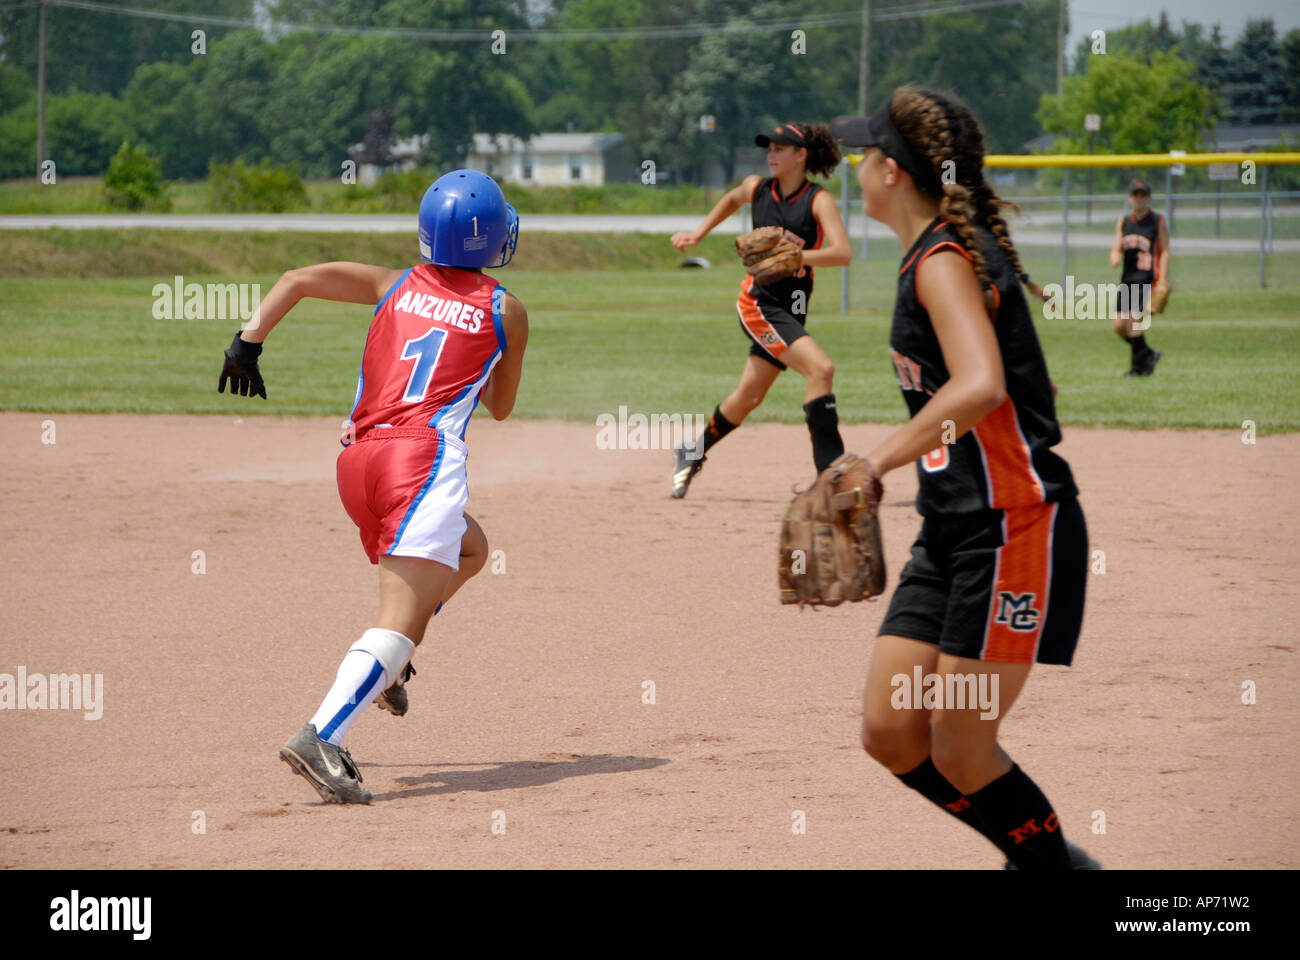 Baseball action Stock Photo